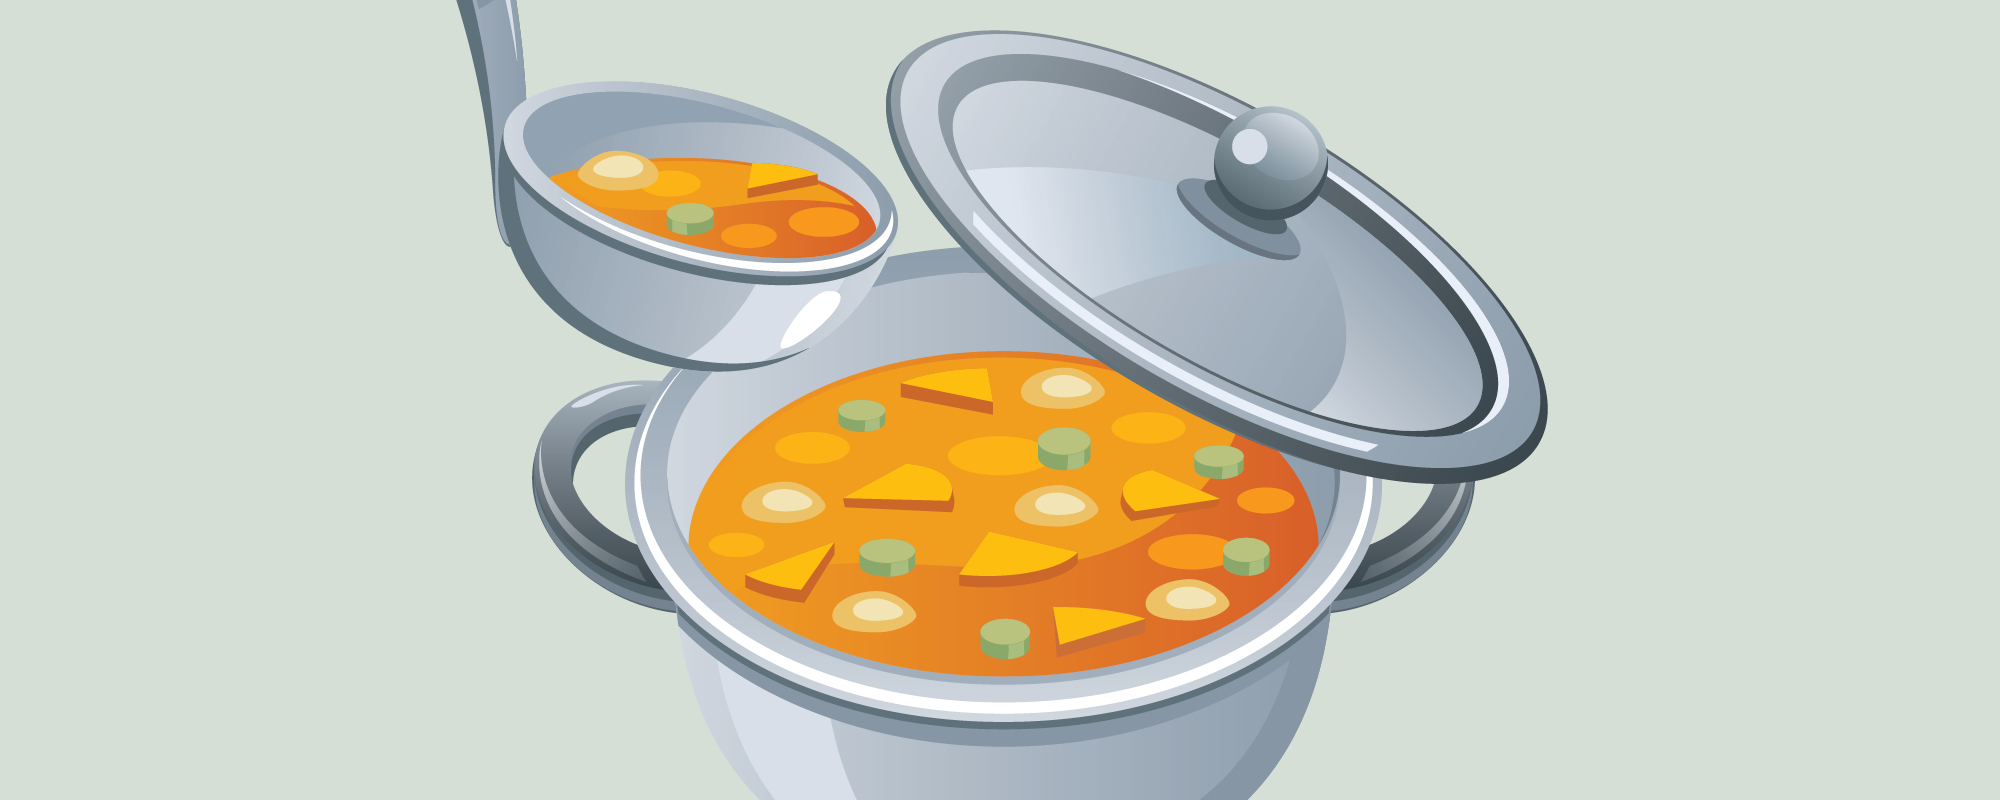 Illustration of a pot of soup